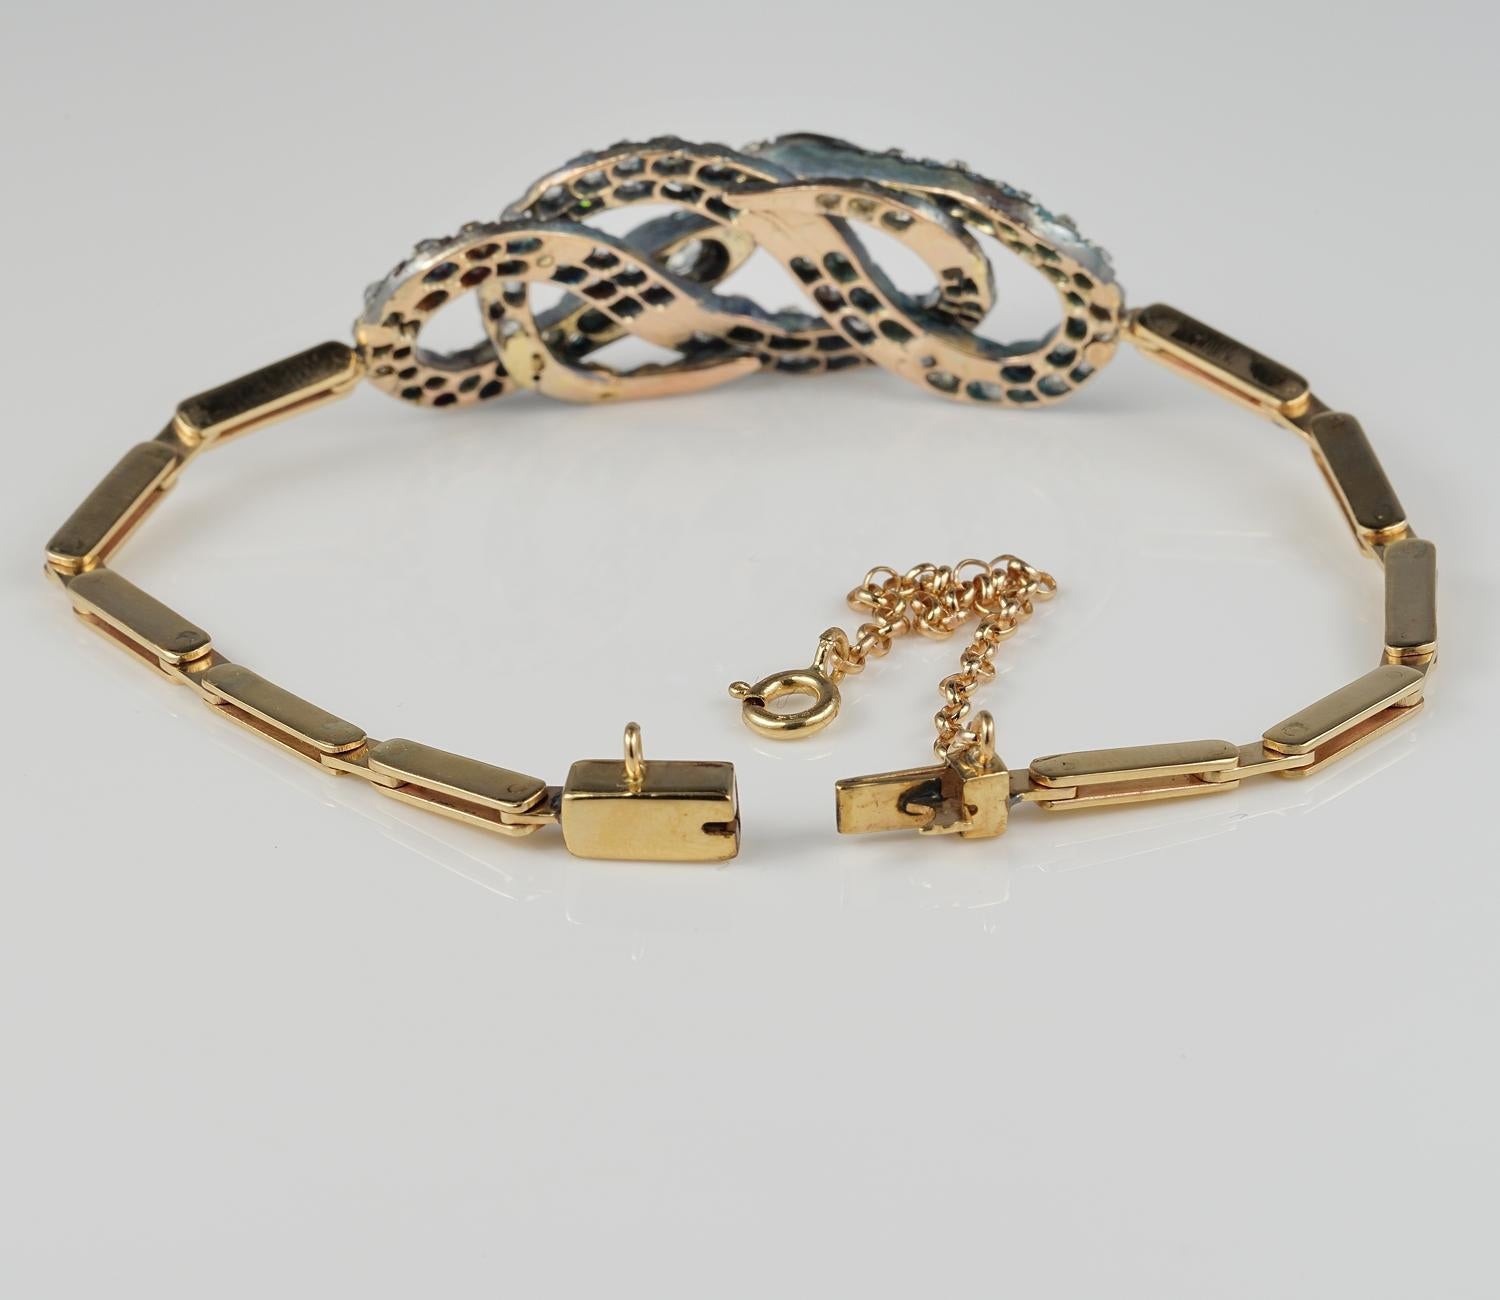 Antique 5.80 Carat Old Mine Cut Diamond Rare Coiled Snake Bracelet For Sale 1